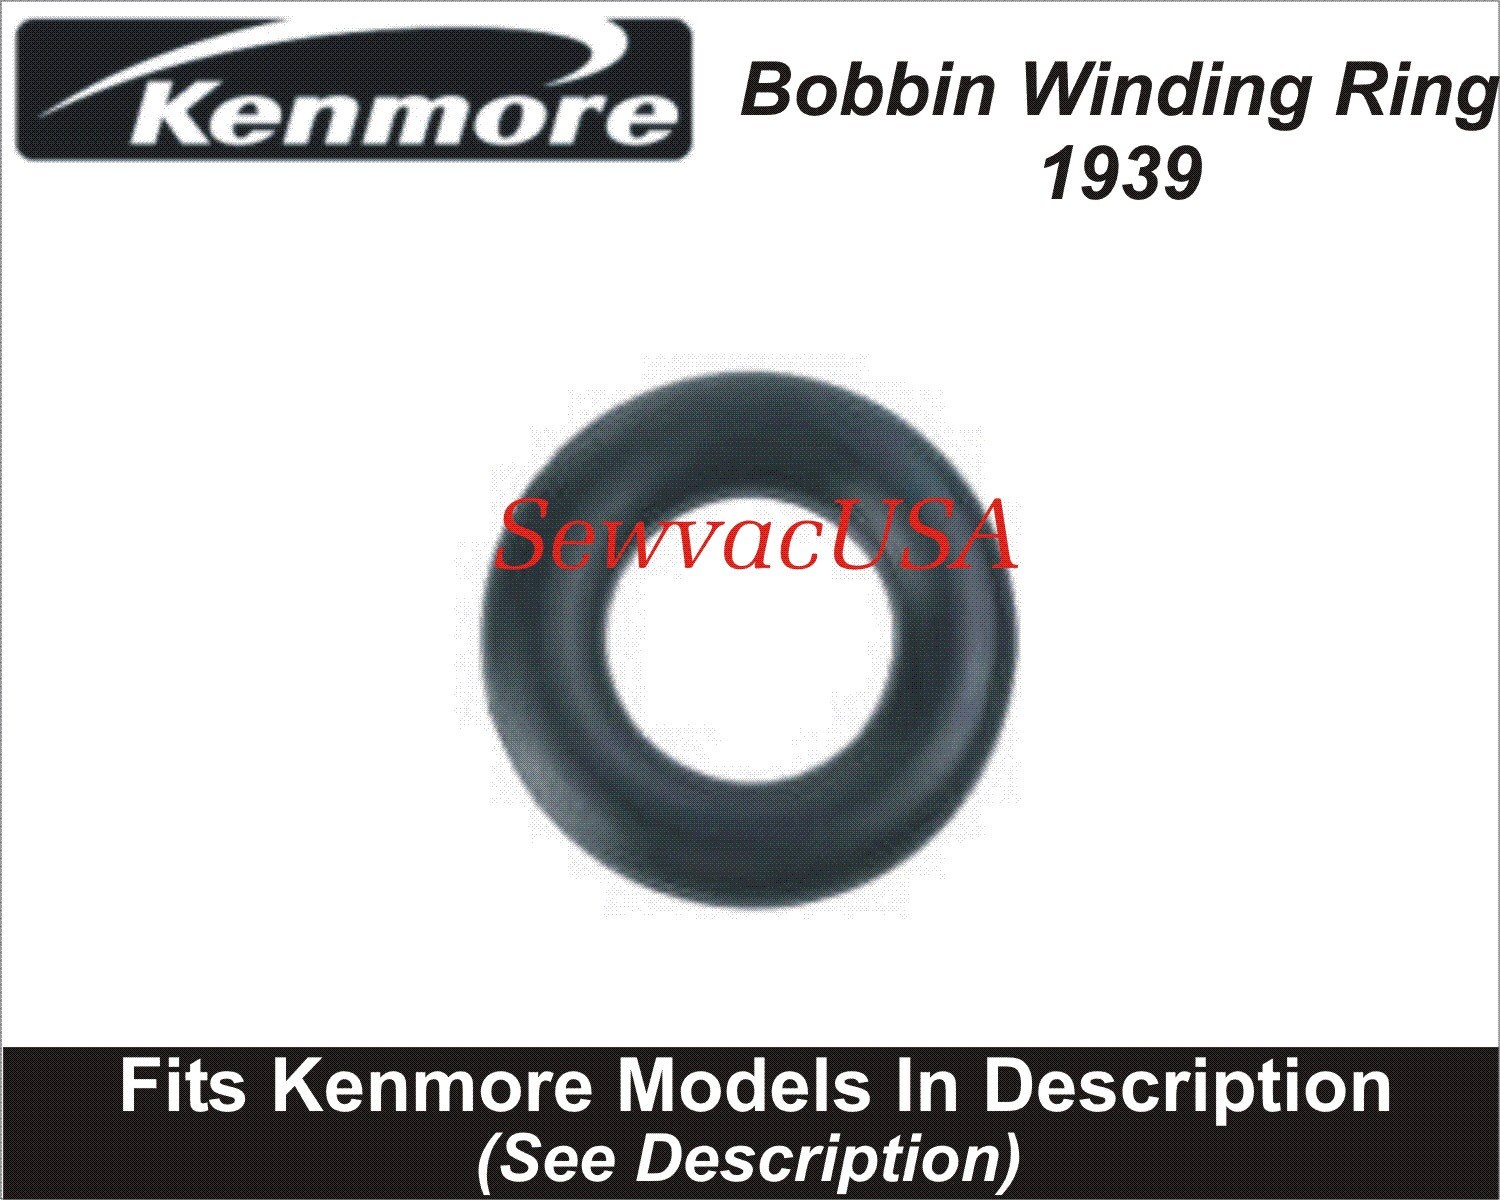 Kenmore Bobbin Winding Ring 1939 Fits Models In Description